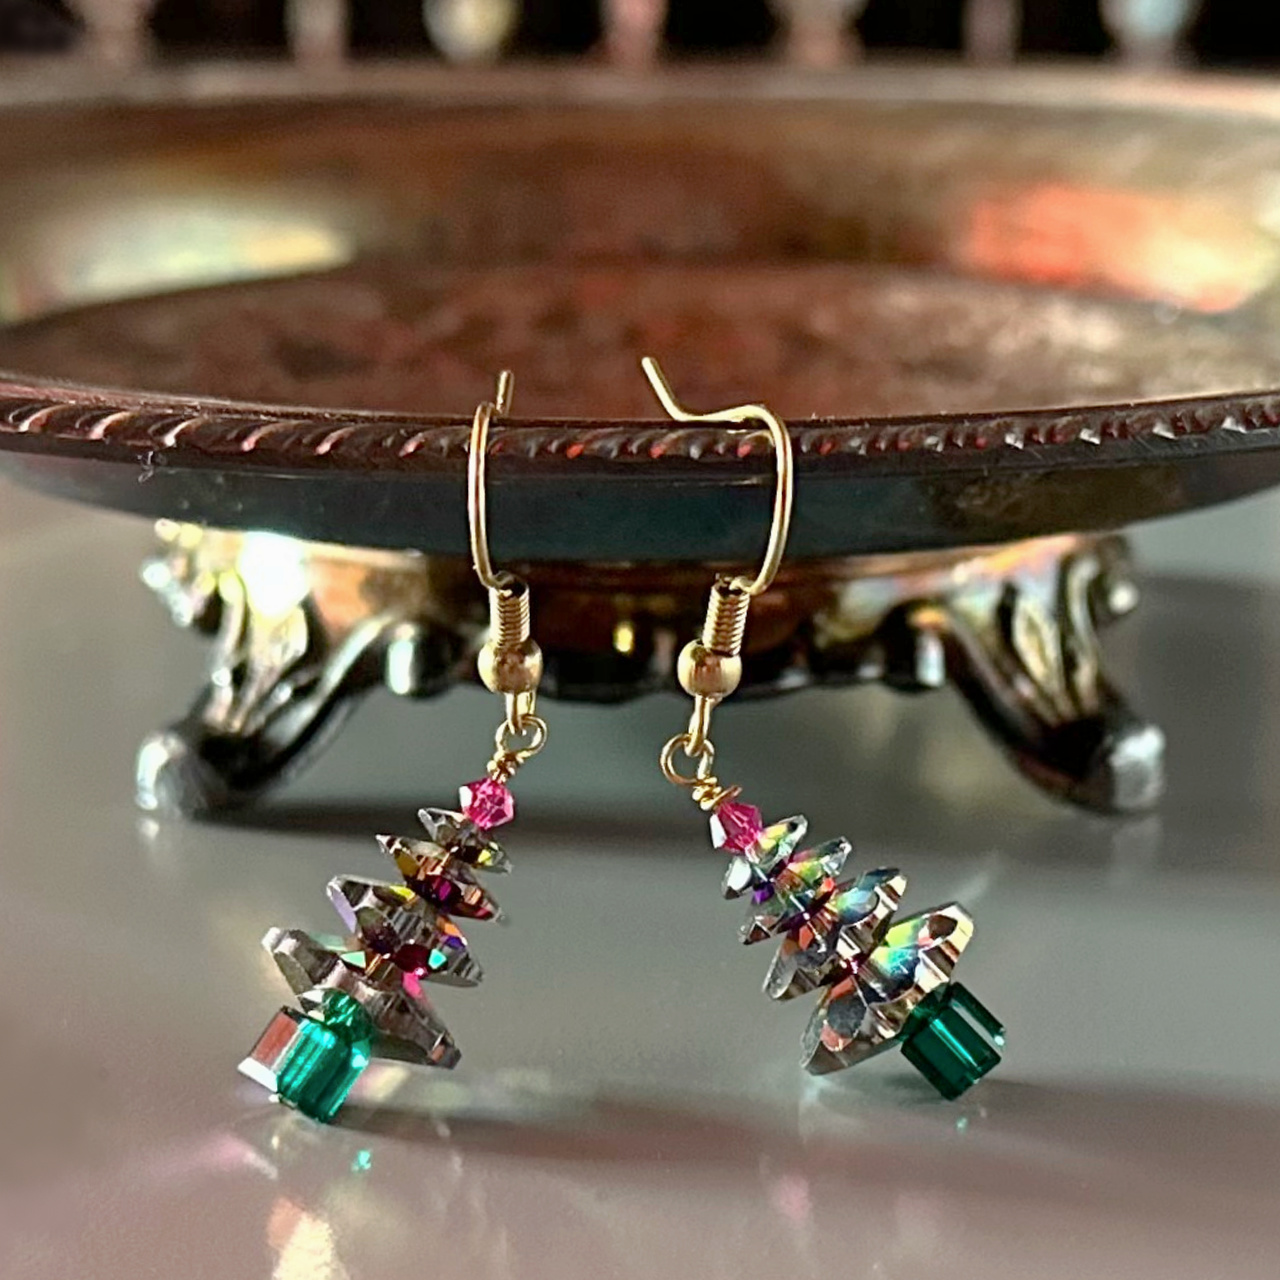 Sparkly Swarovski crystal Christmas Tree earrings available at Suzie Q Studio.